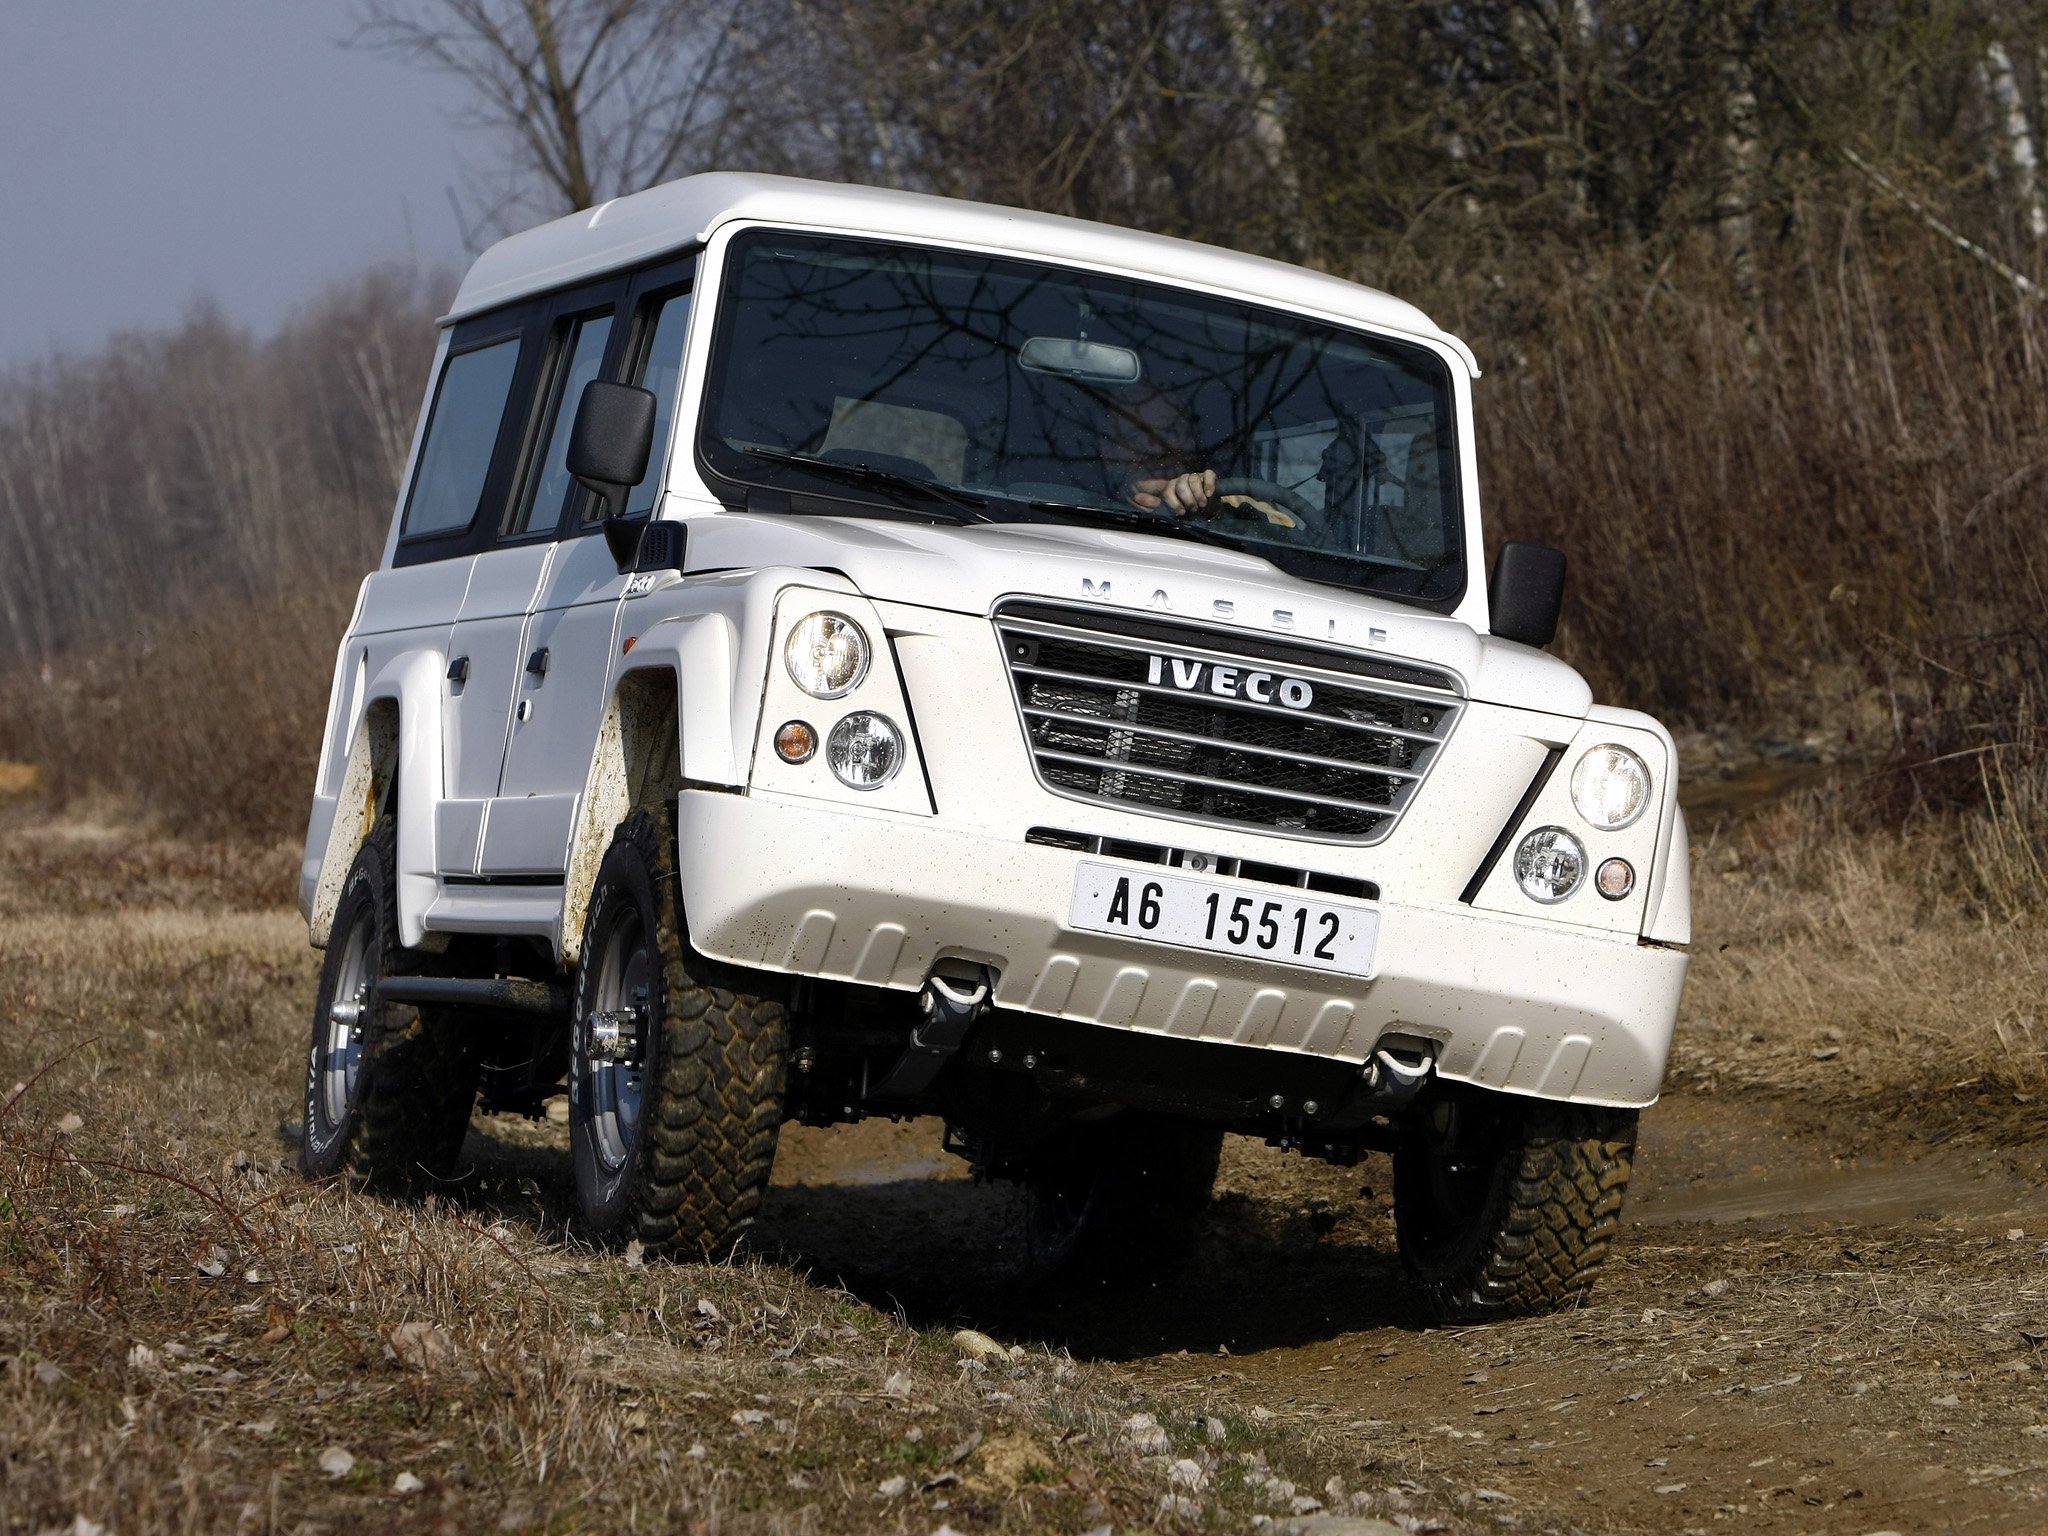 2007 11, Iveco, Massif, 5 door, Suv, 4x4, Awd, Fiat, Land, Rover, Defender Wallpaper